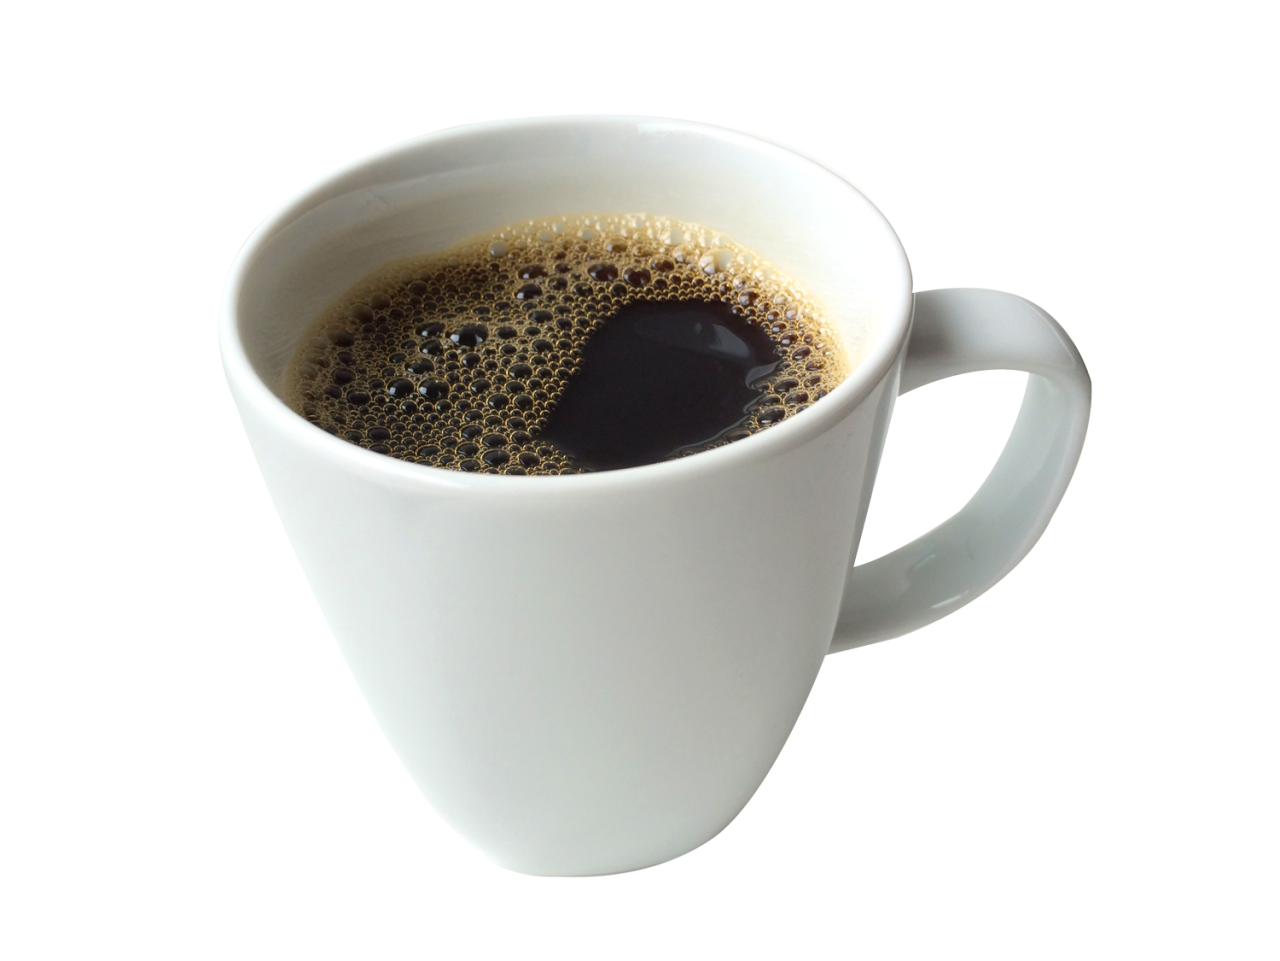 Cup, Mug Coffee PNG Image - PurePNG | Free transparent CC0 ...